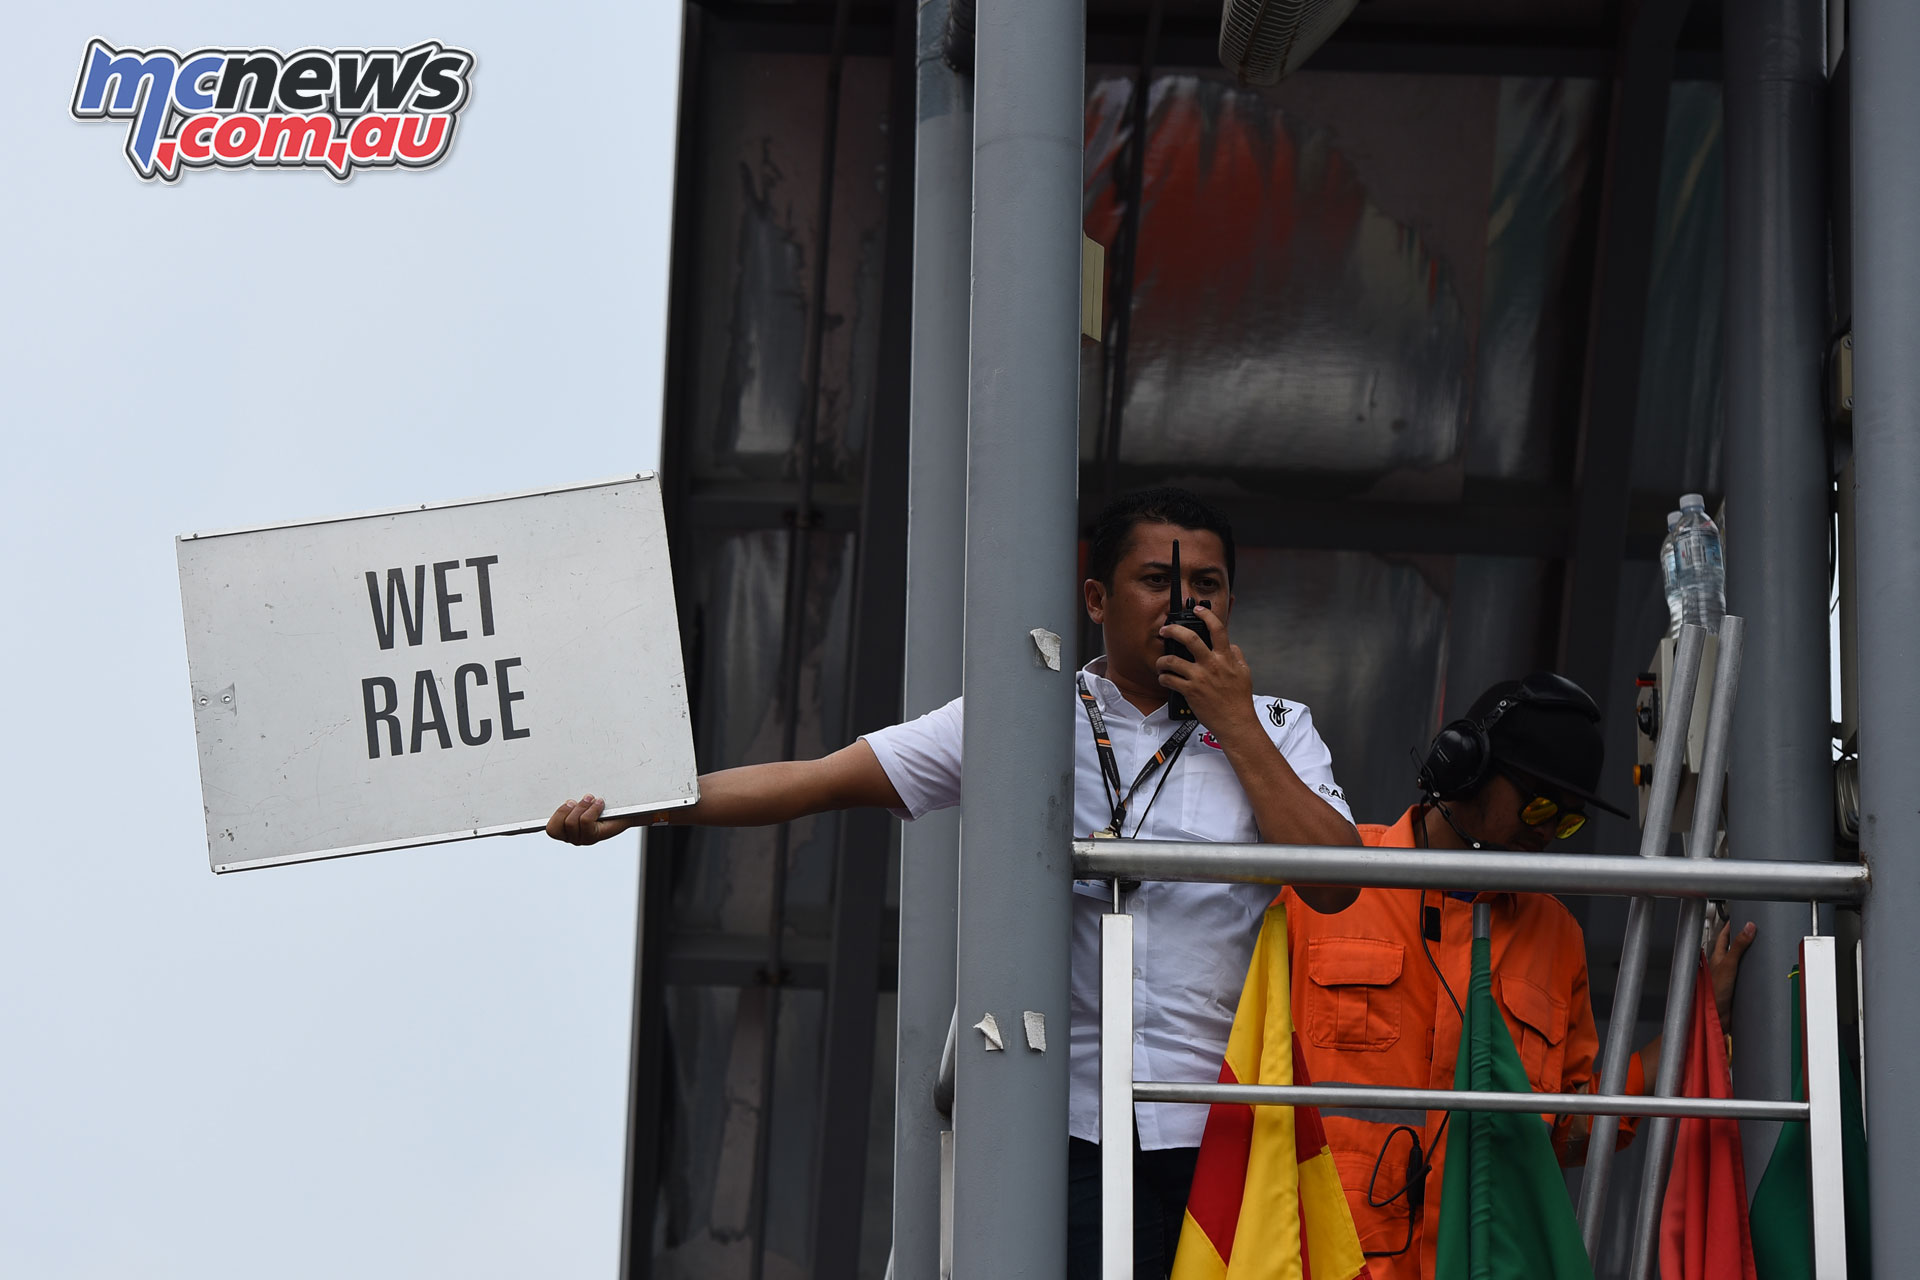 ARRC Rnd Wet Race ARRC Sepang